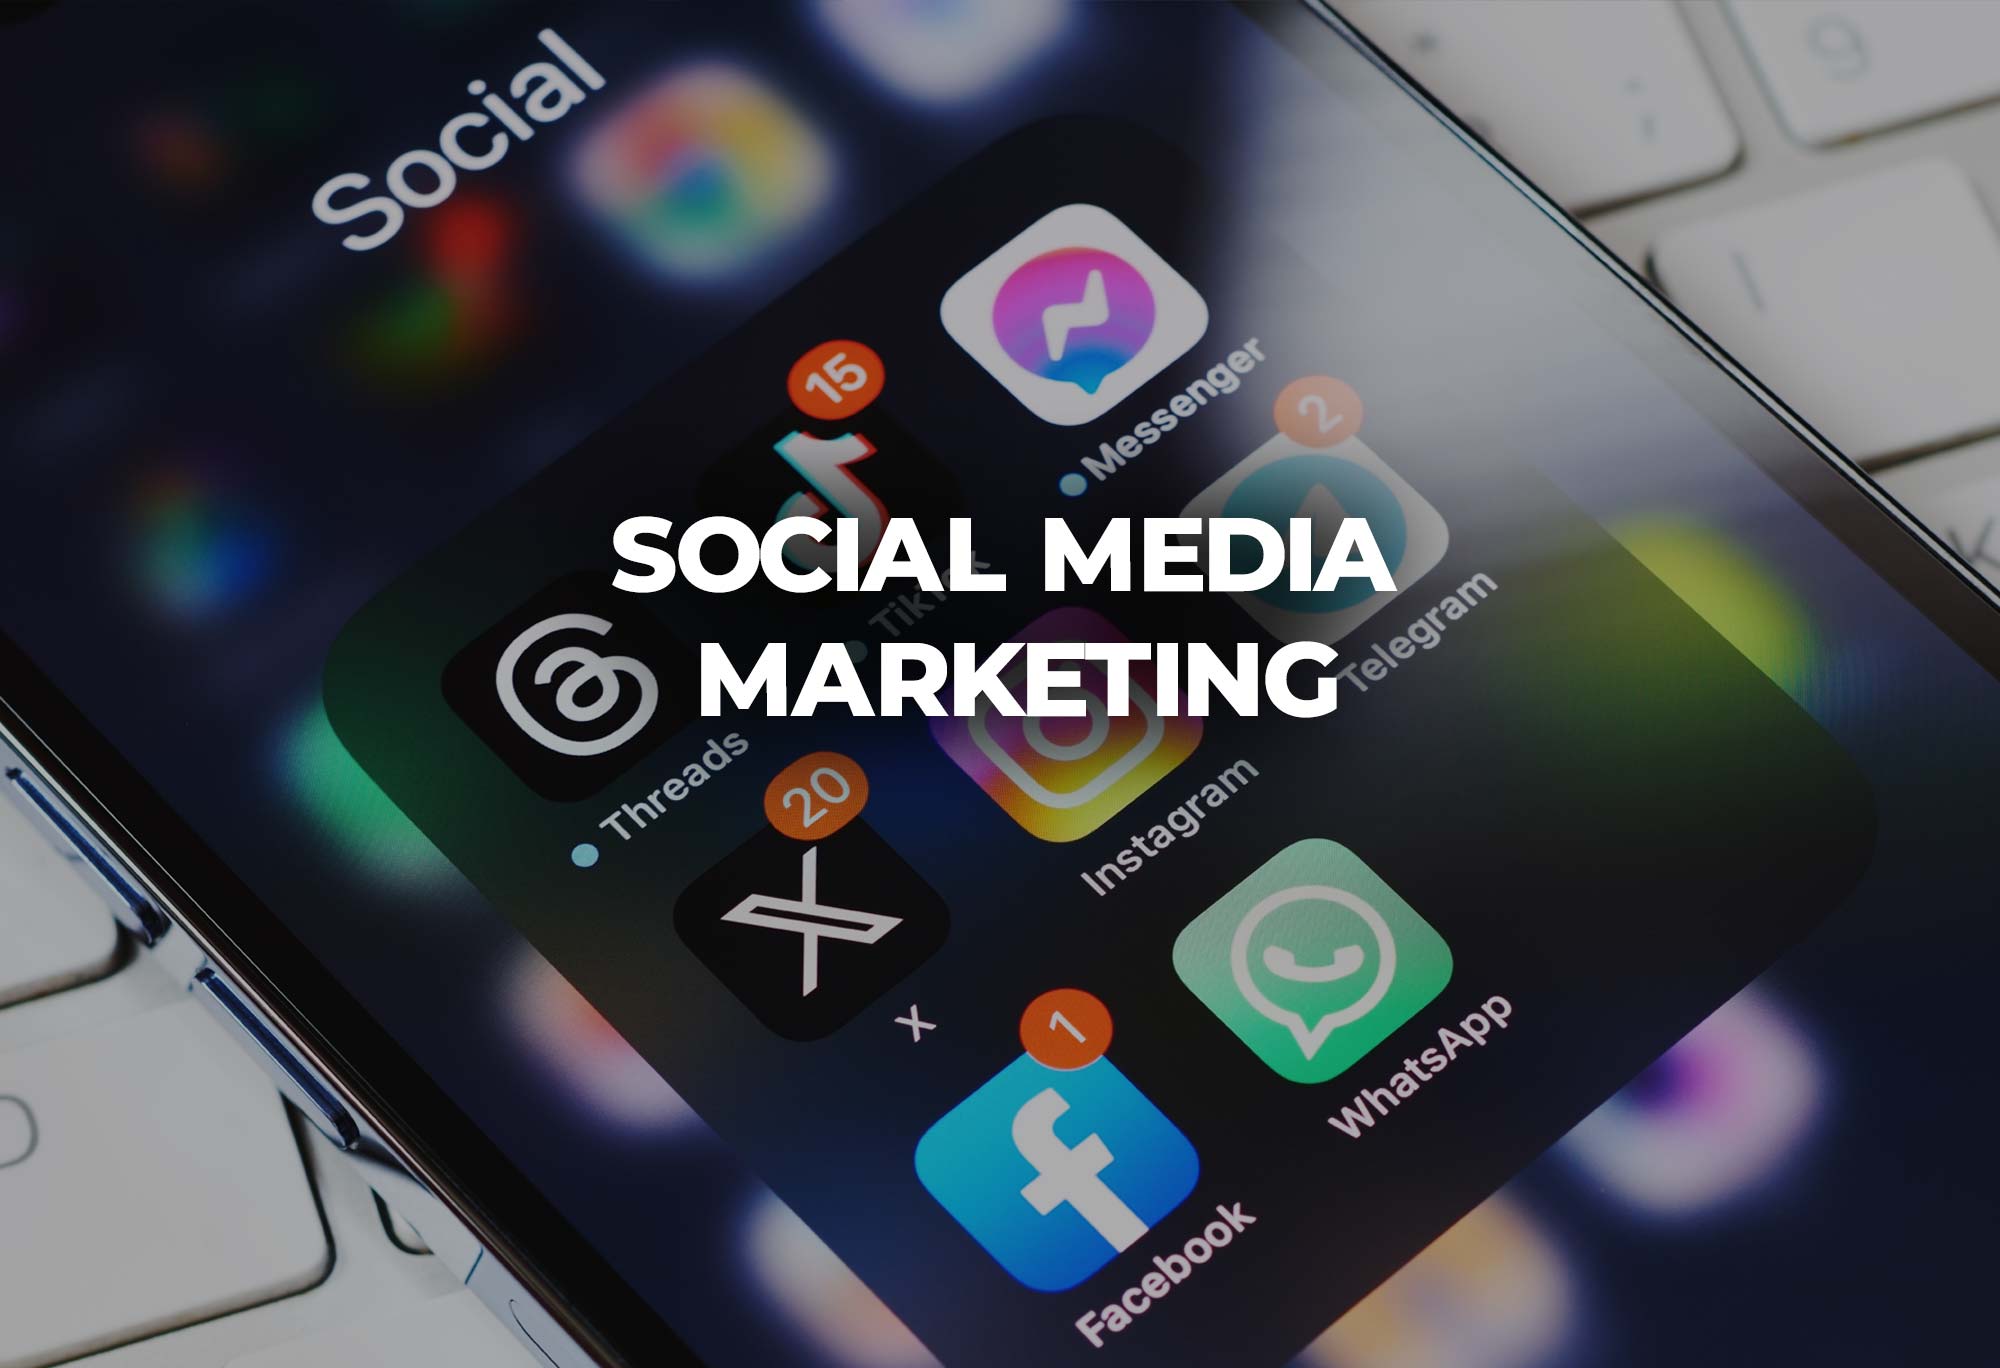 social-media-marketing-trinamics-studios-media-funnel-ads-werbung-marketing-